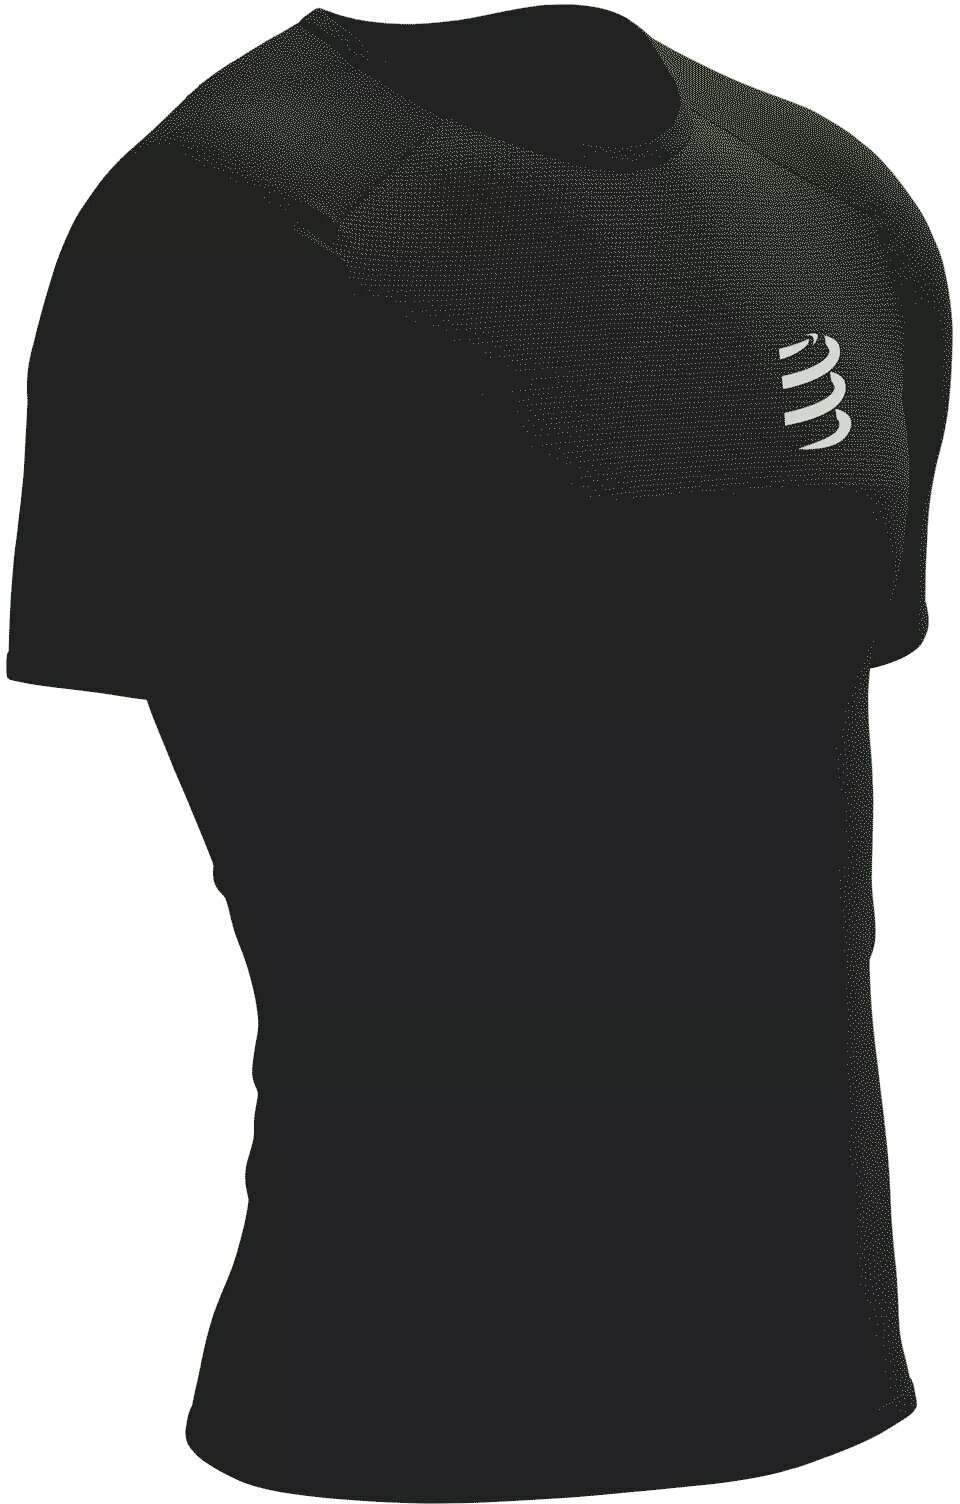 Laufshirt mit Kurzarm
 Compressport Performance SS Tshirt M Black/White L Laufshirt mit Kurzarm